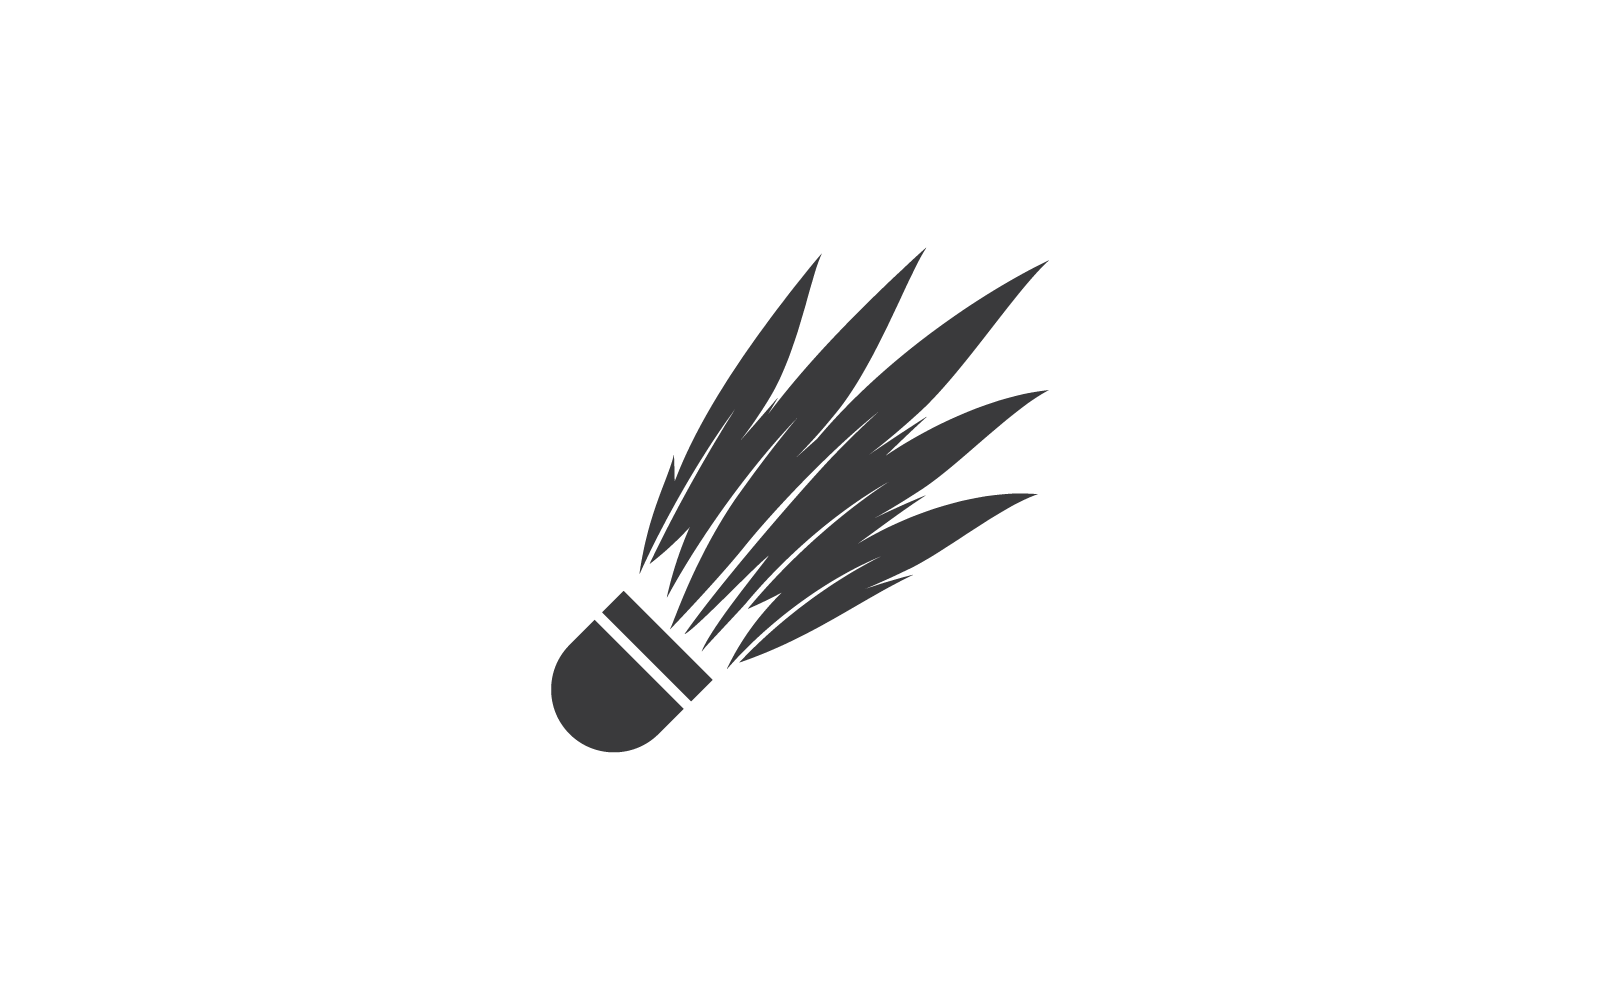 Suttle cock badminton logo illustration vector design template